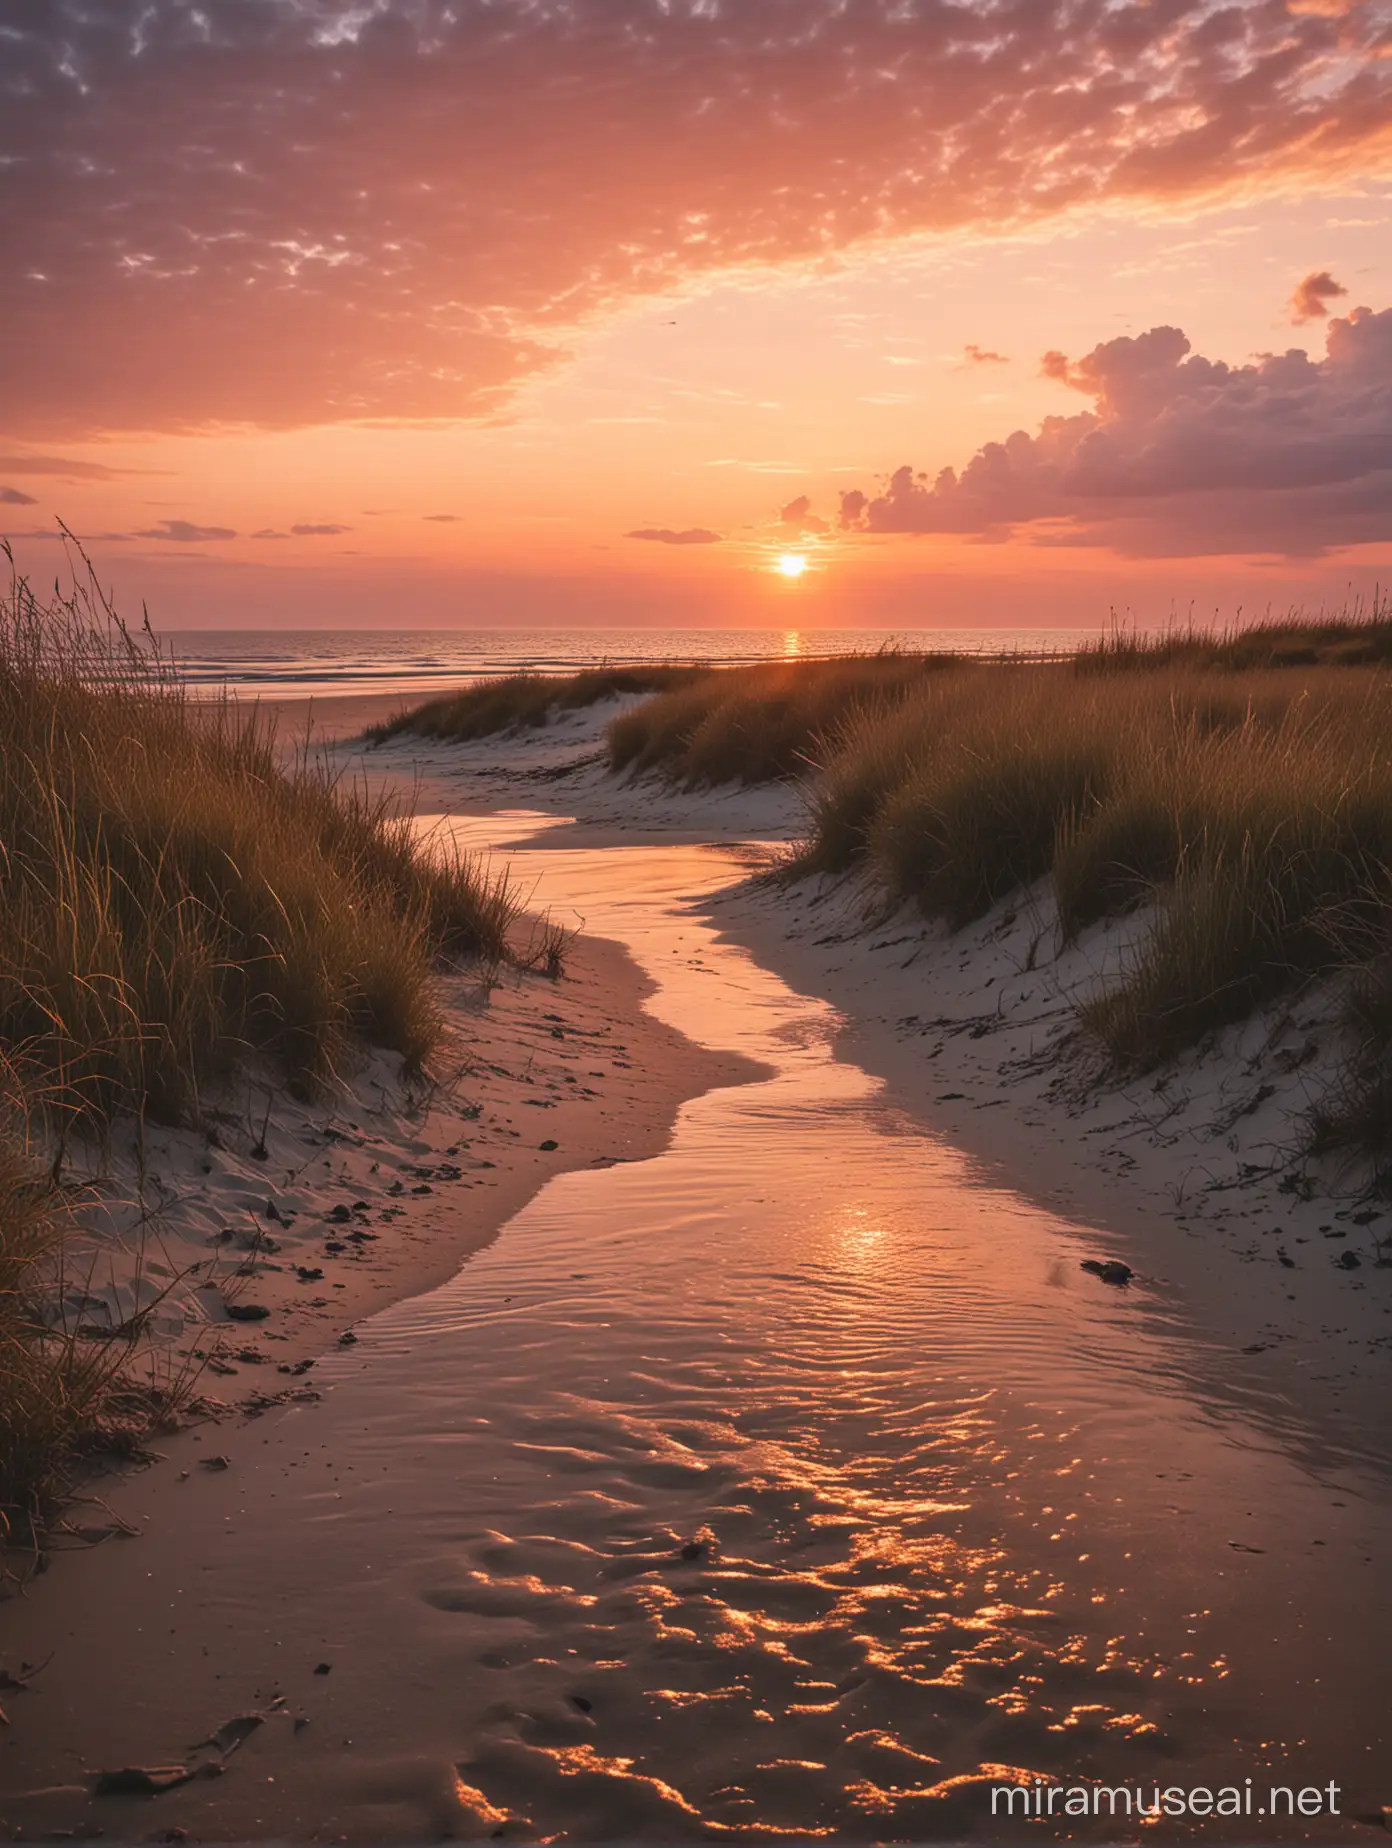 a wonderful photograph from a sunet near a beach in early summer, serne feelings, nostalgic vibes, wonderful colors